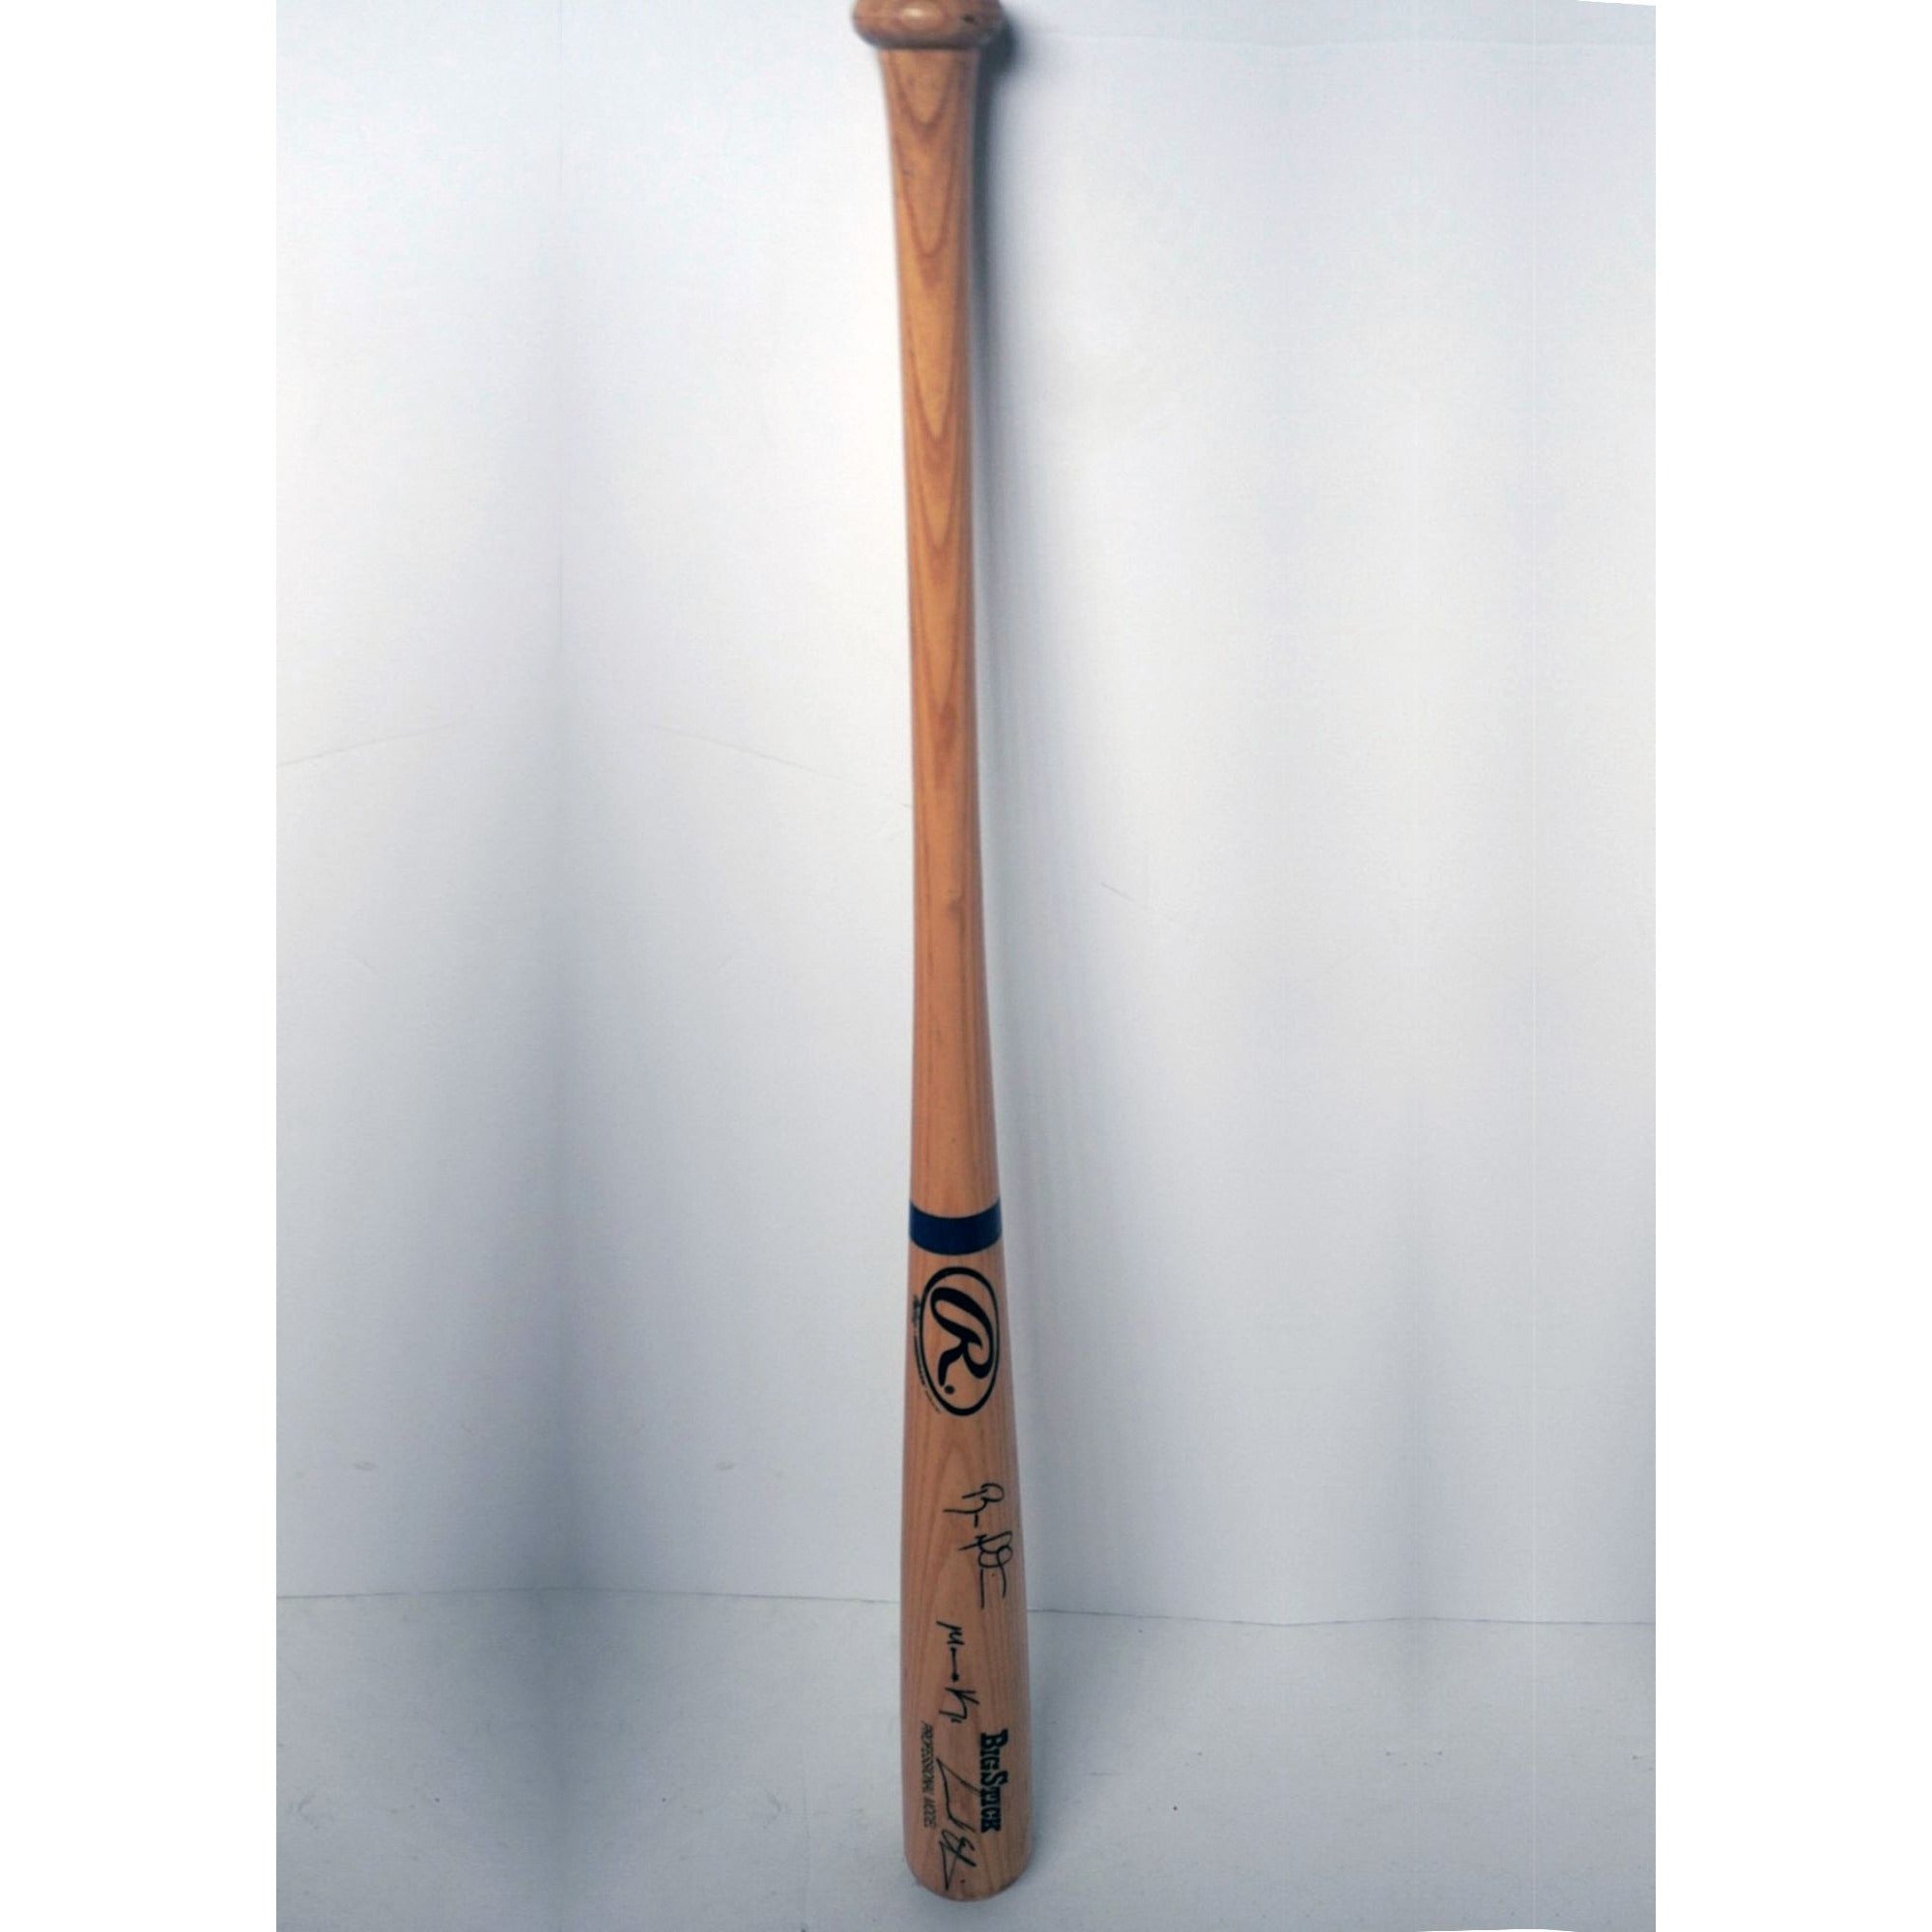 Los Angeles Dodgers Raul Mondesi, Matt Kemp, Andre Ethier signed big stick bat